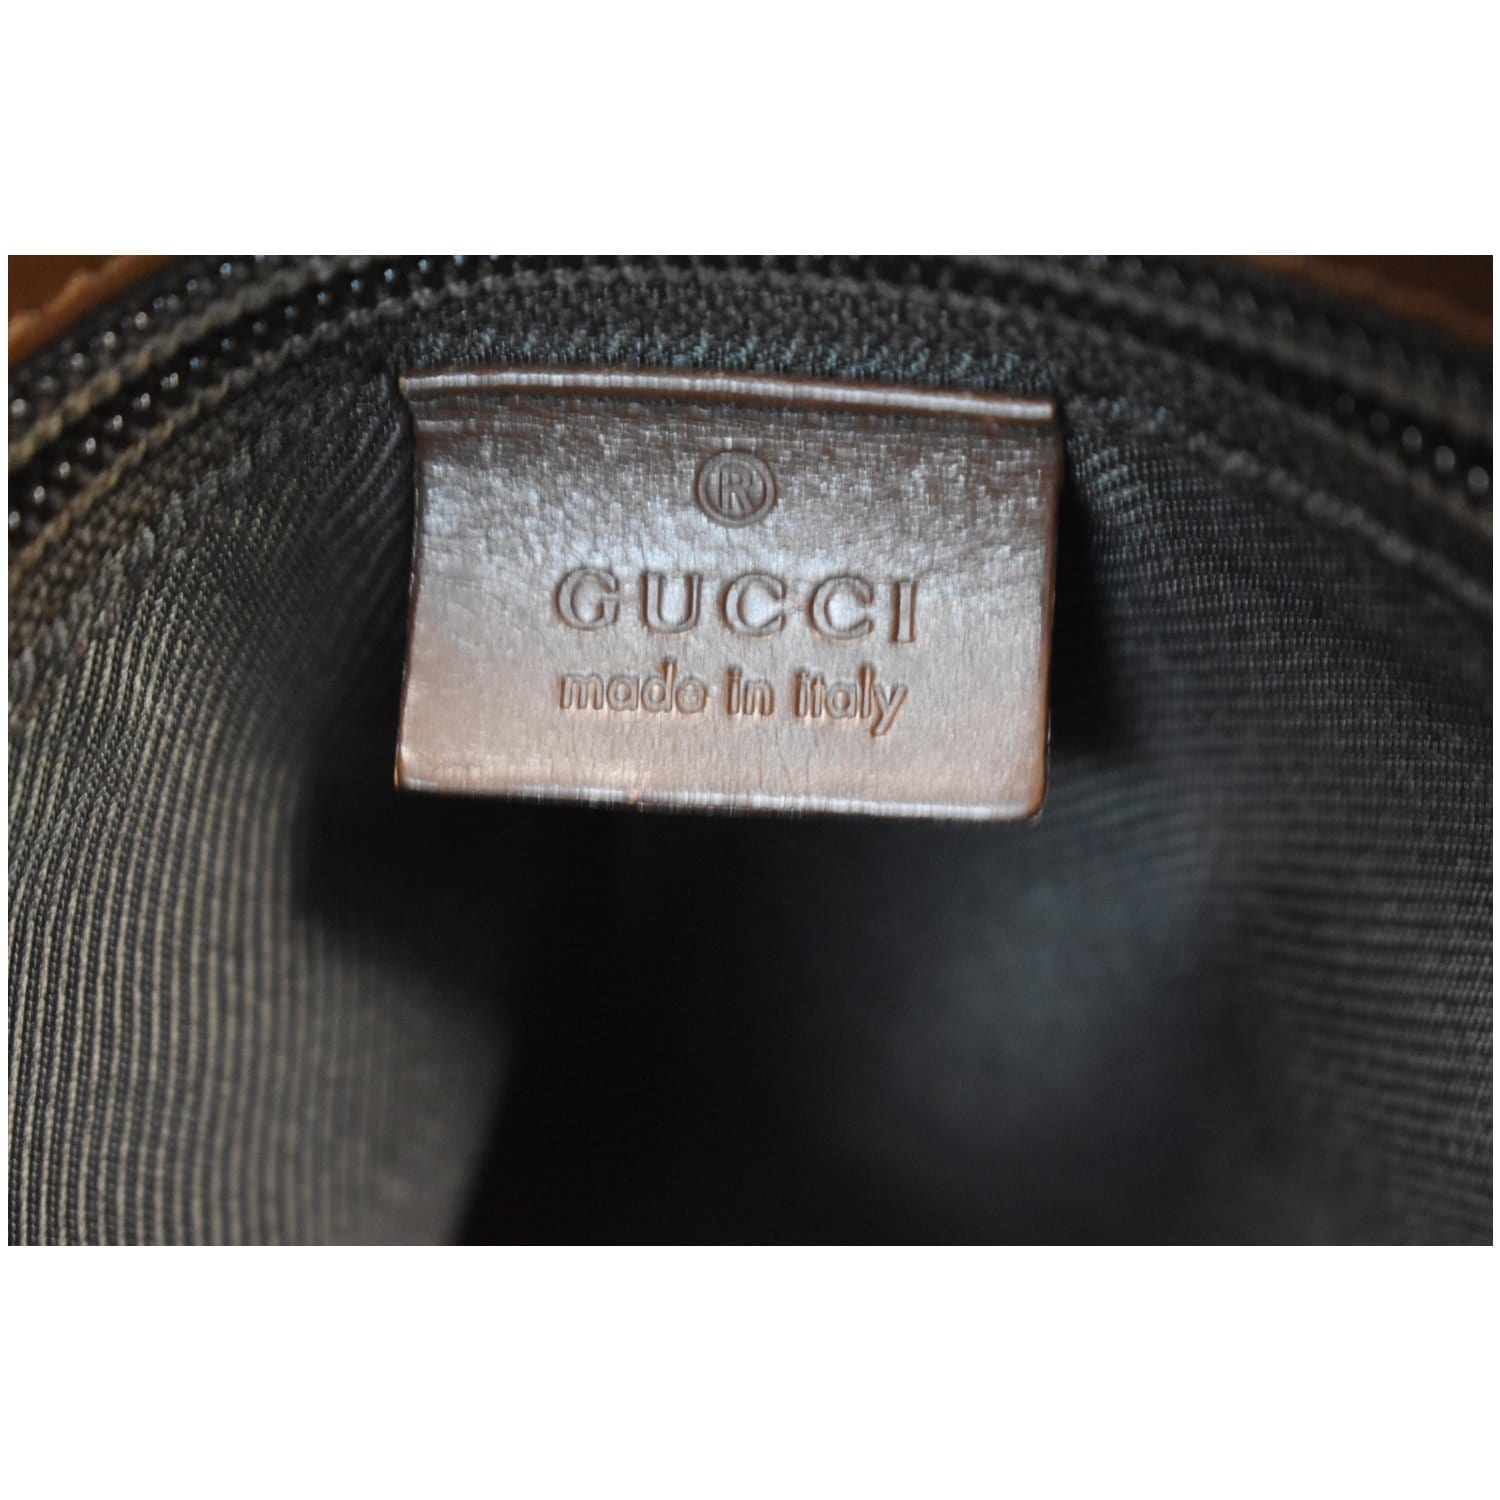 Luxury Vintage Gucci Monogram Bag in Black and Gray Color. 